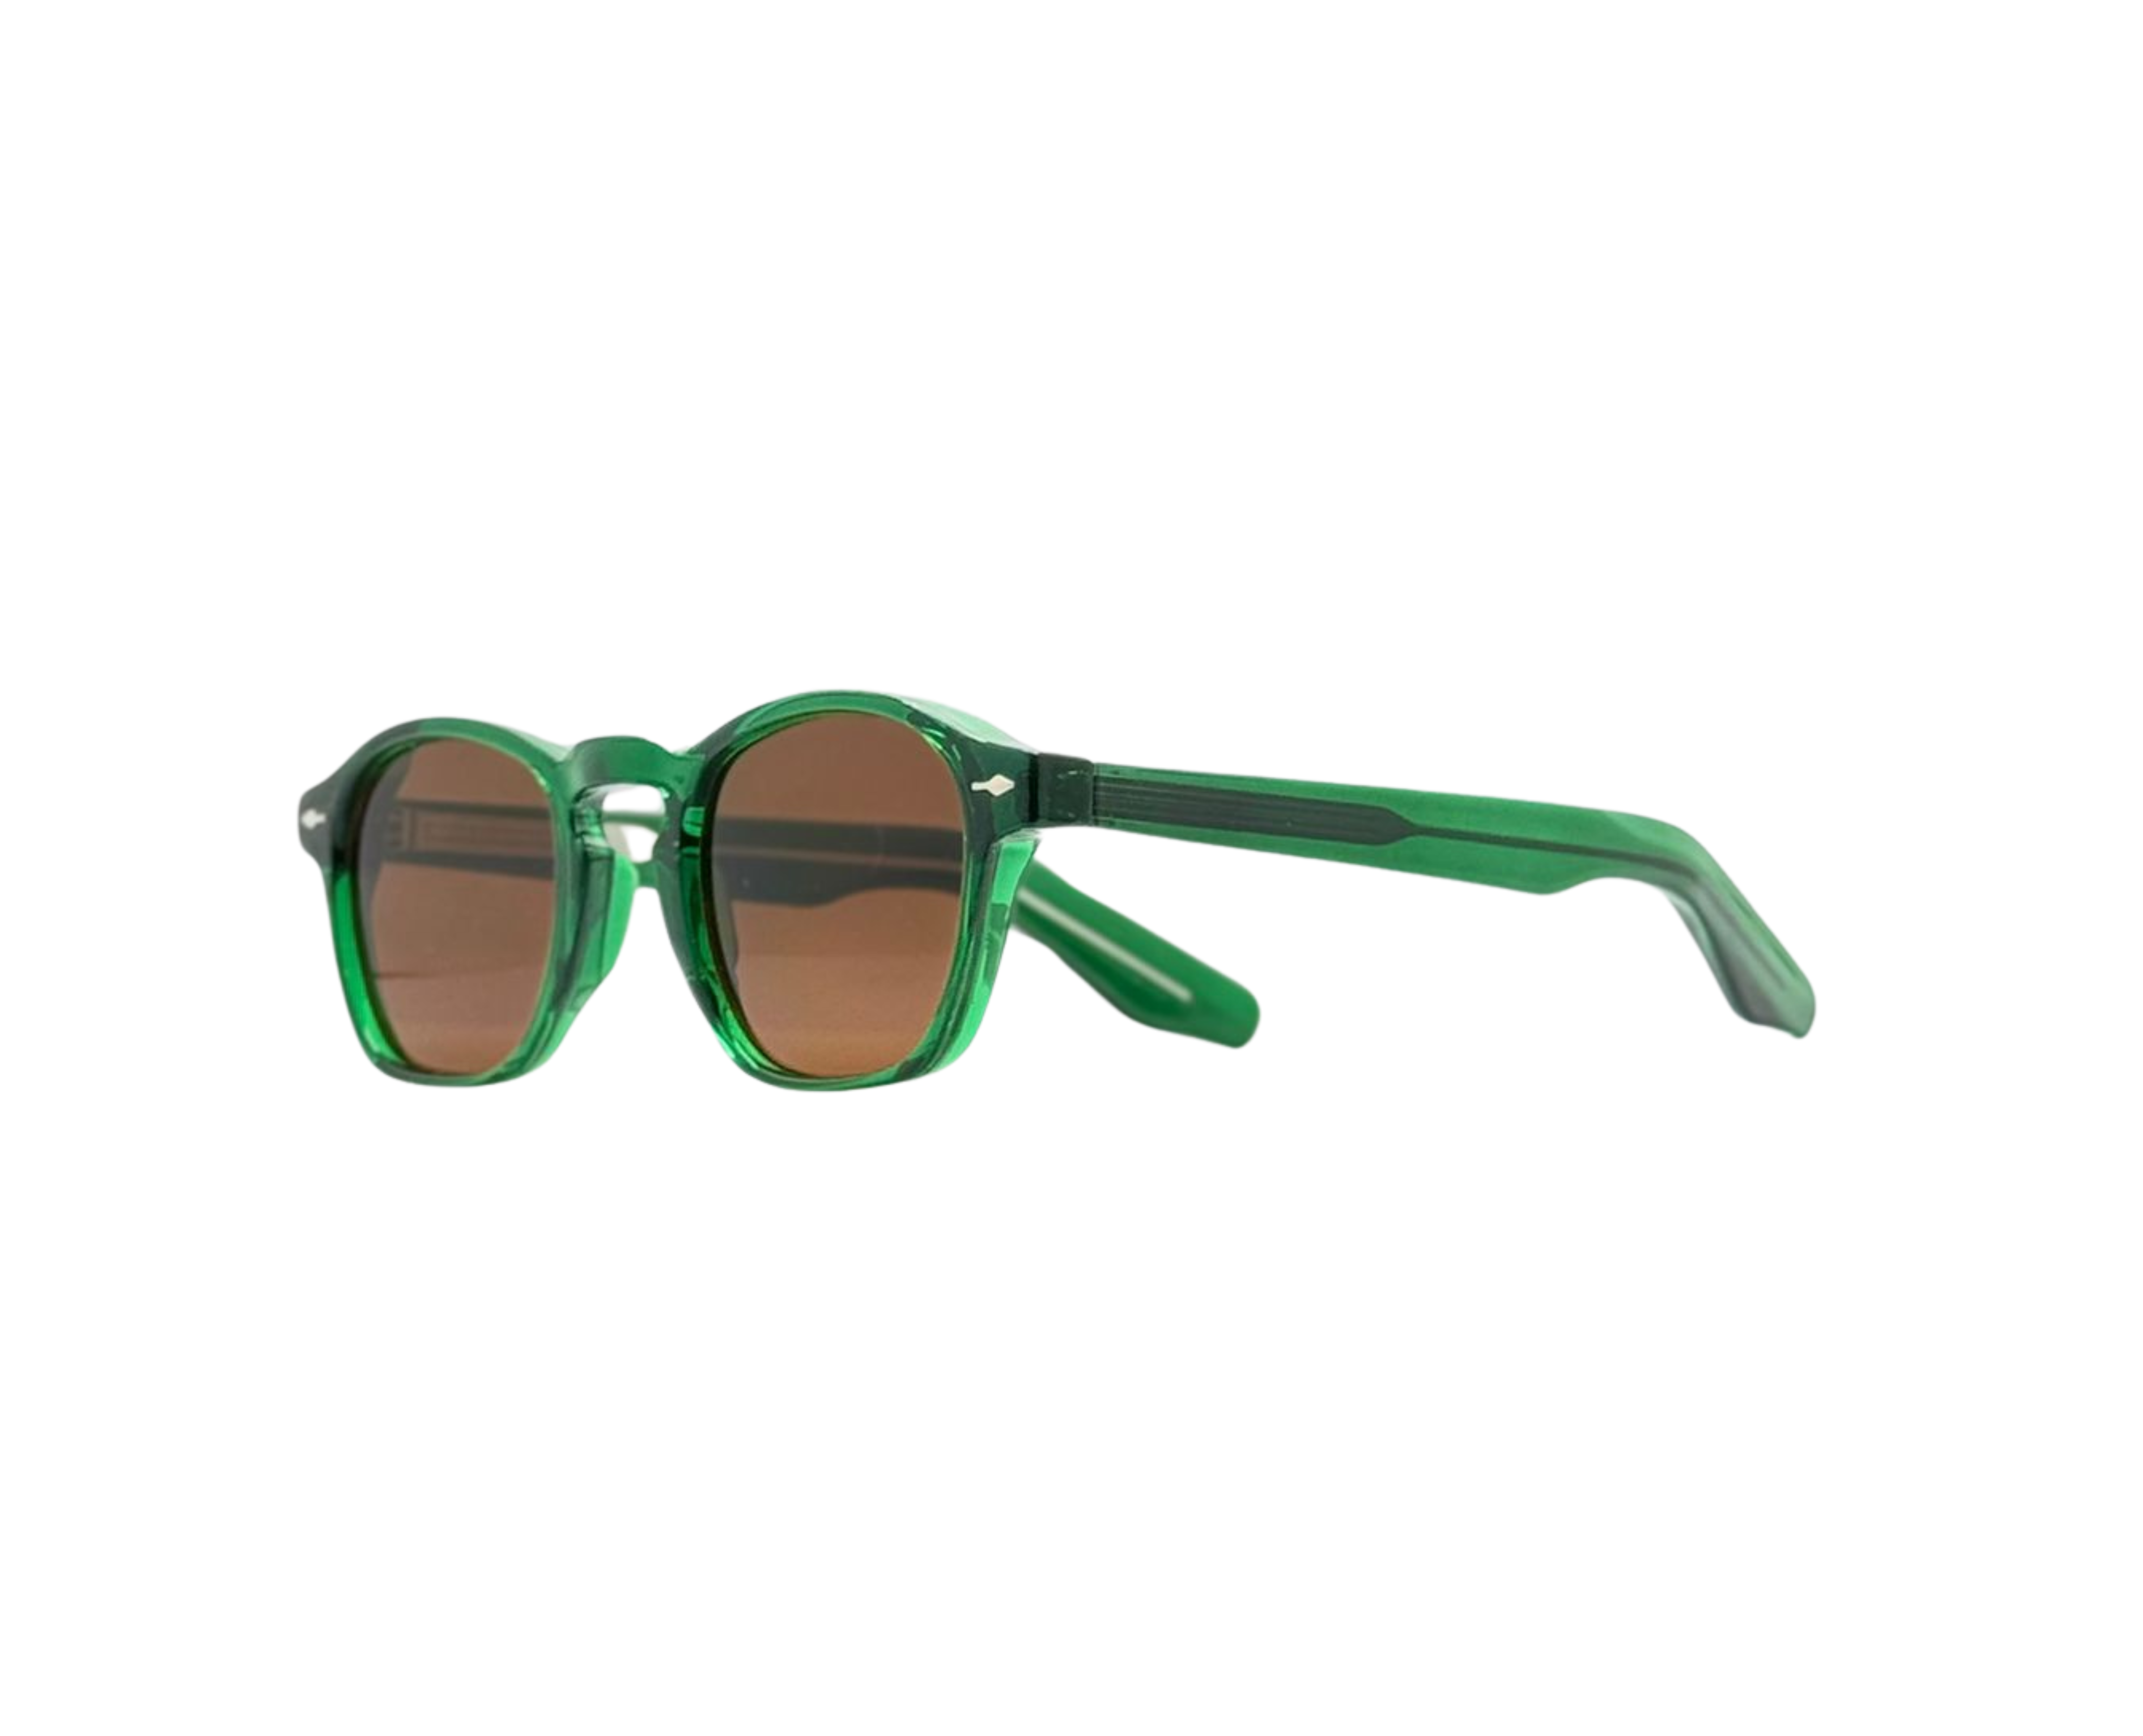 NS Luxury - 9823 - Green - Sunglasses